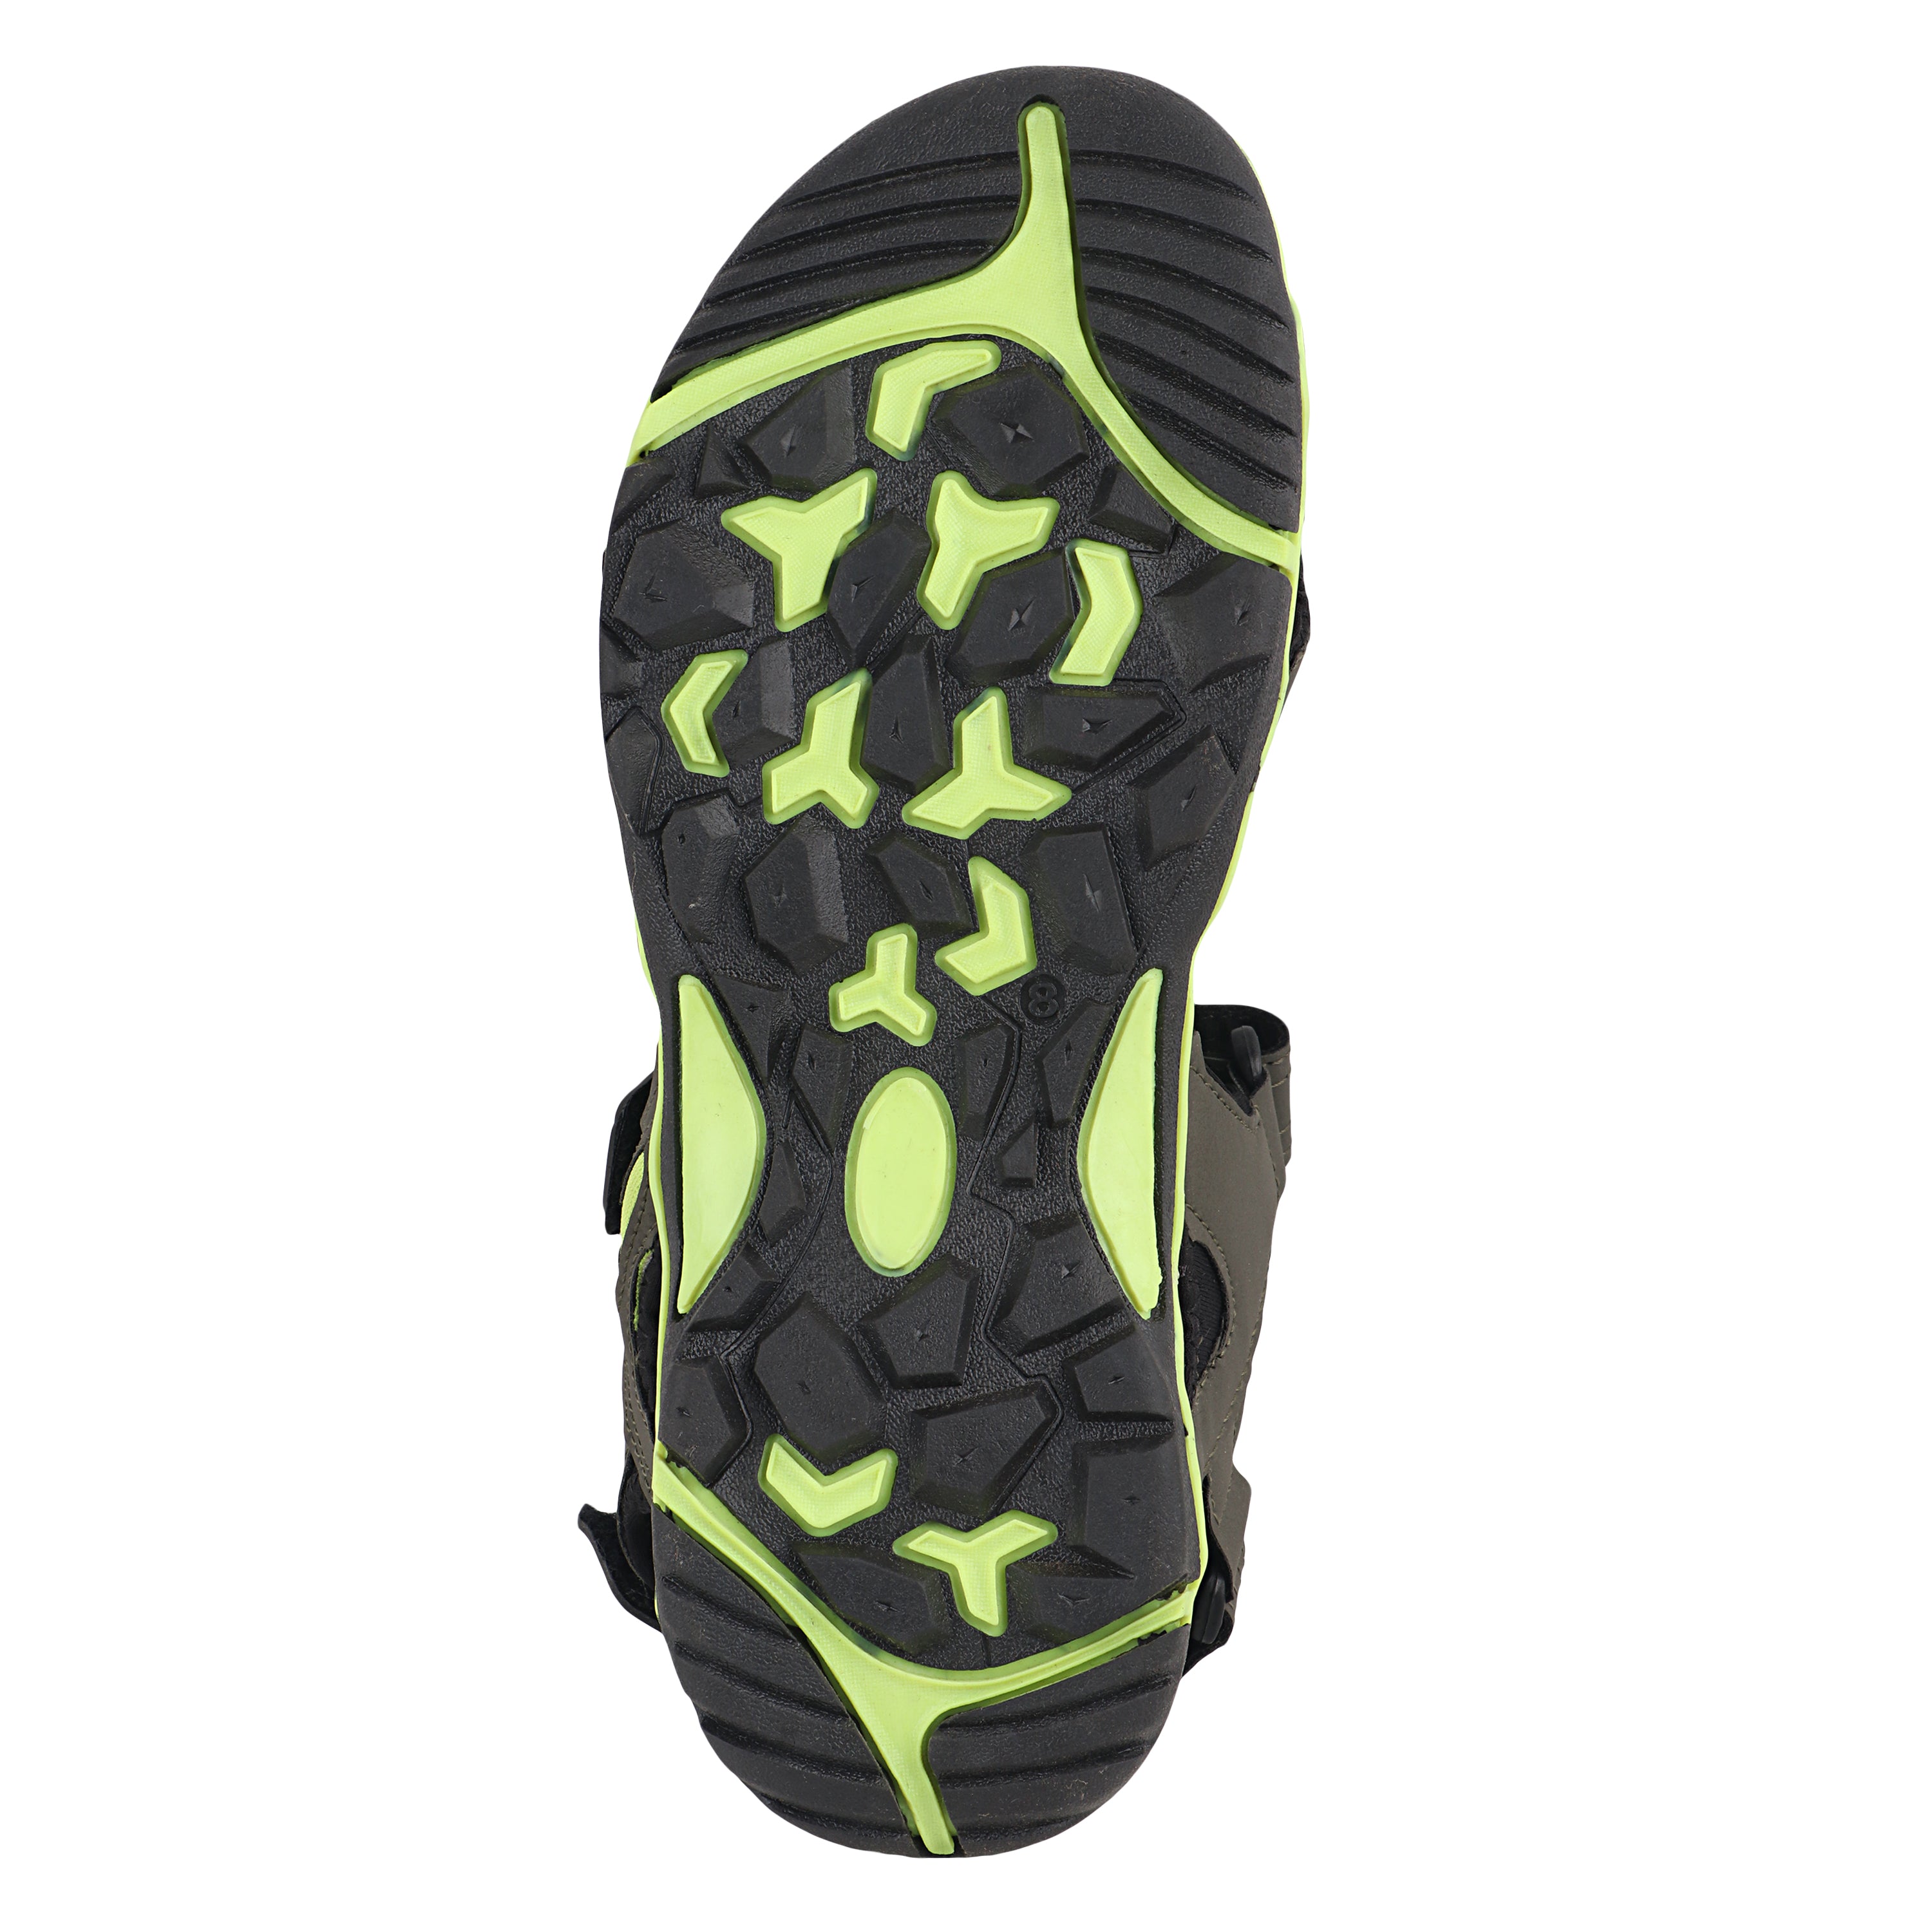 Fuel Jordan Sandals For Men's (Olive-P Green)